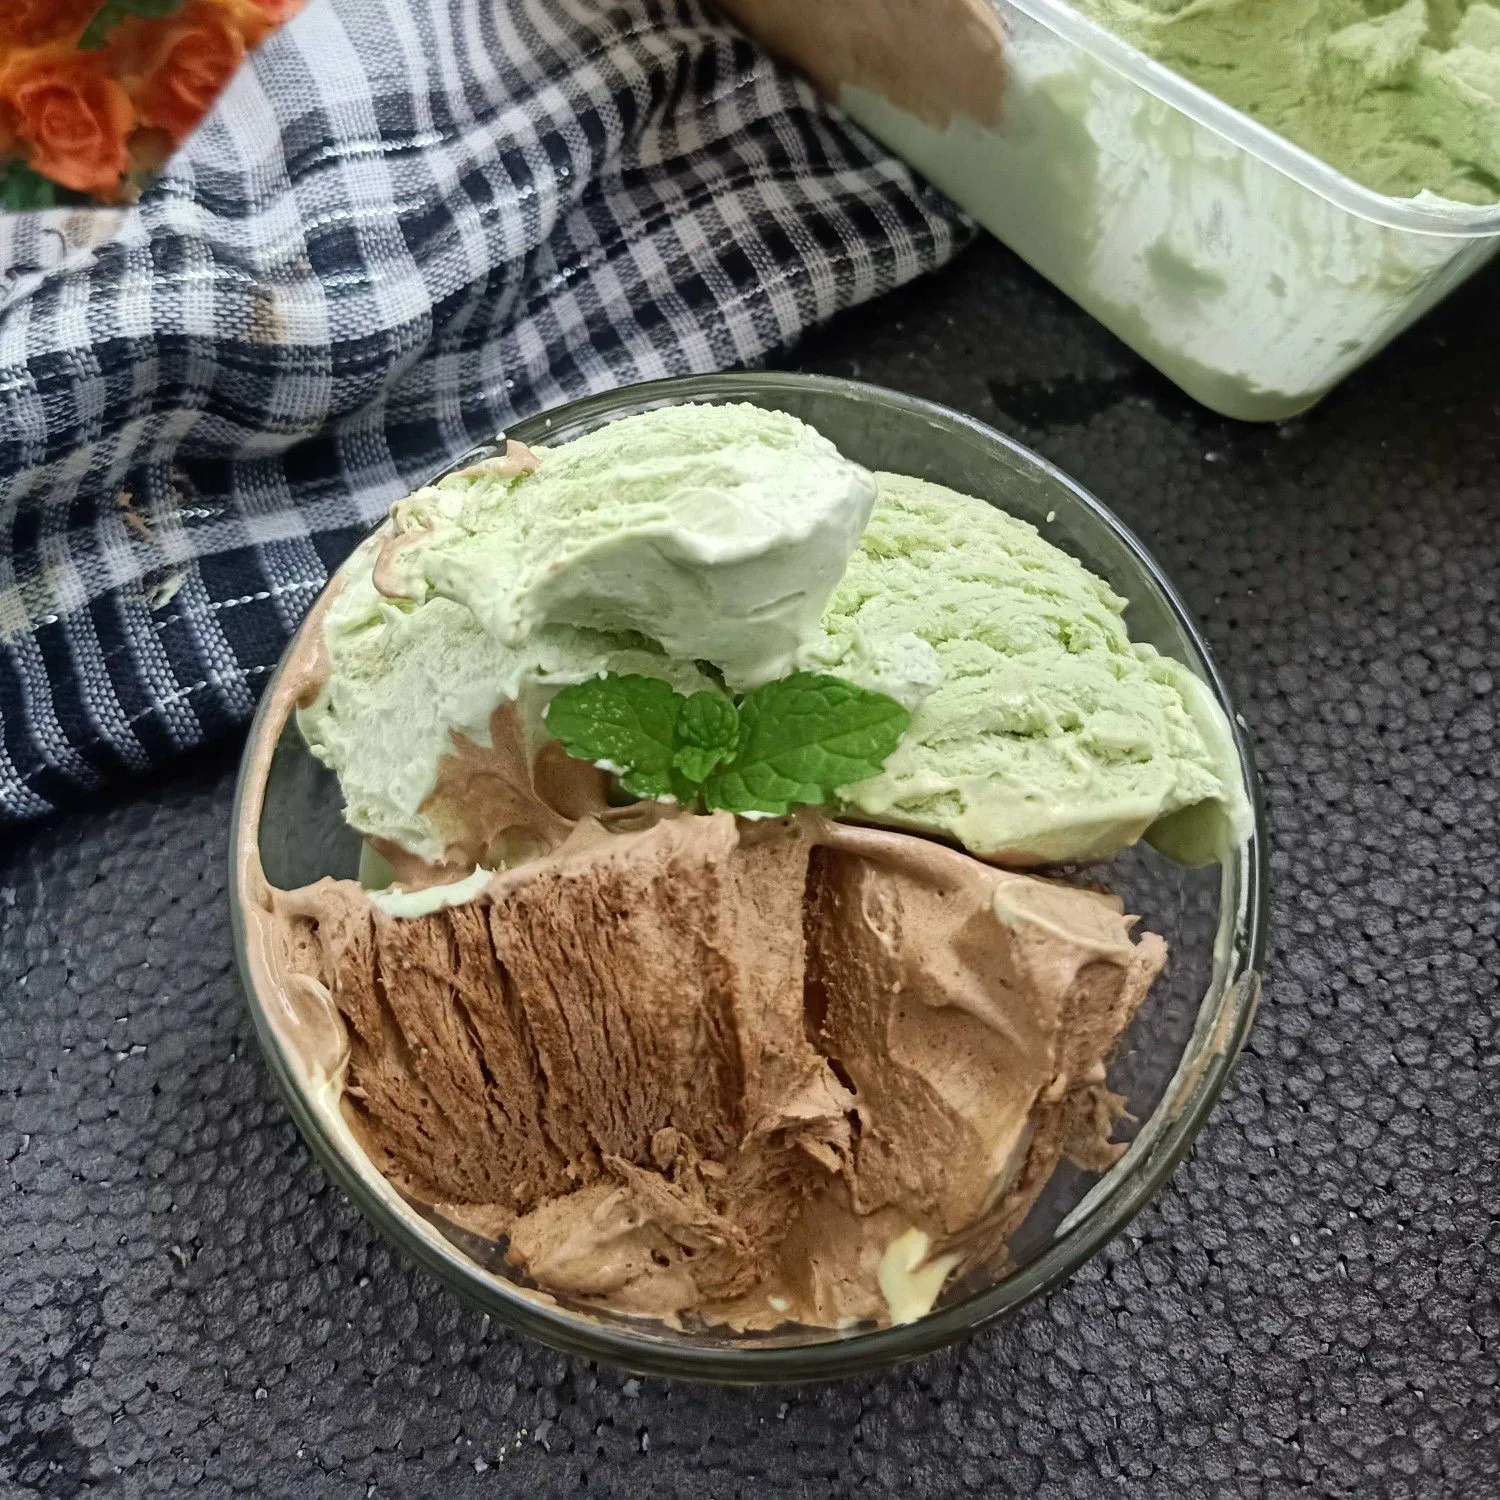 Ice Cream Green Tea and Chocolate #JagoMasakMinggu3Periode3